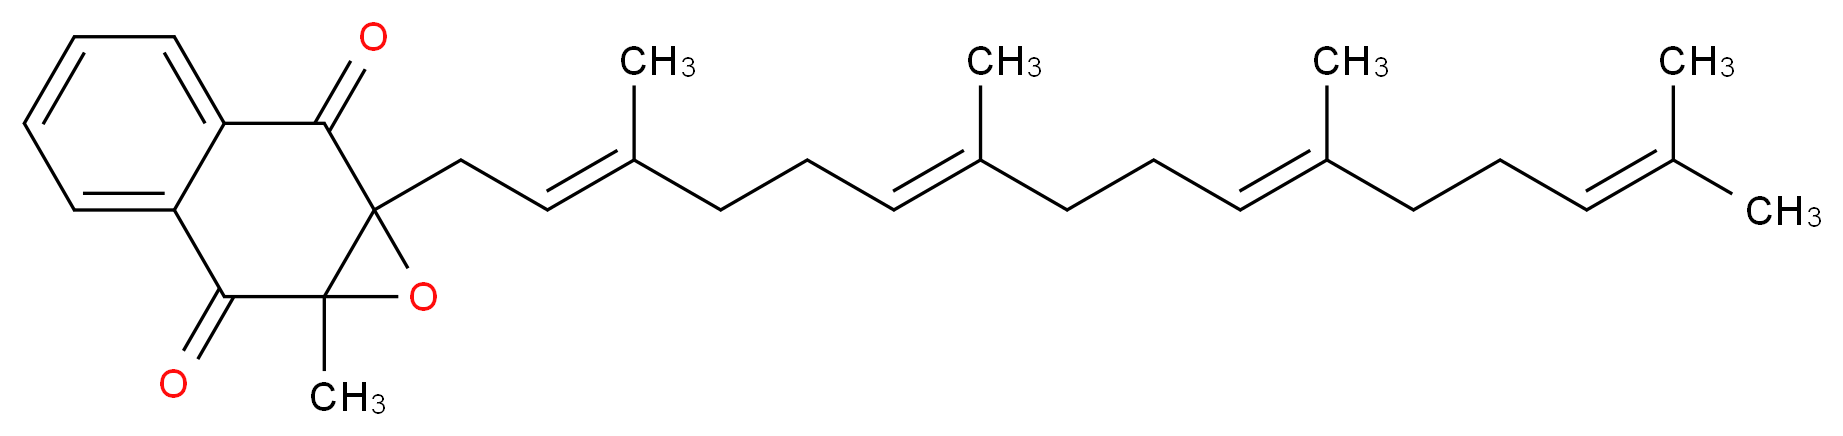 1a-methyl-7a-[(2E,6E,10E)-3,7,11,15-tetramethylhexadeca-2,6,10,14-tetraen-1-yl]-1aH,2H,7H,7aH-naphtho[2,3-b]oxirene-2,7-dione_分子结构_CAS_72908-86-2